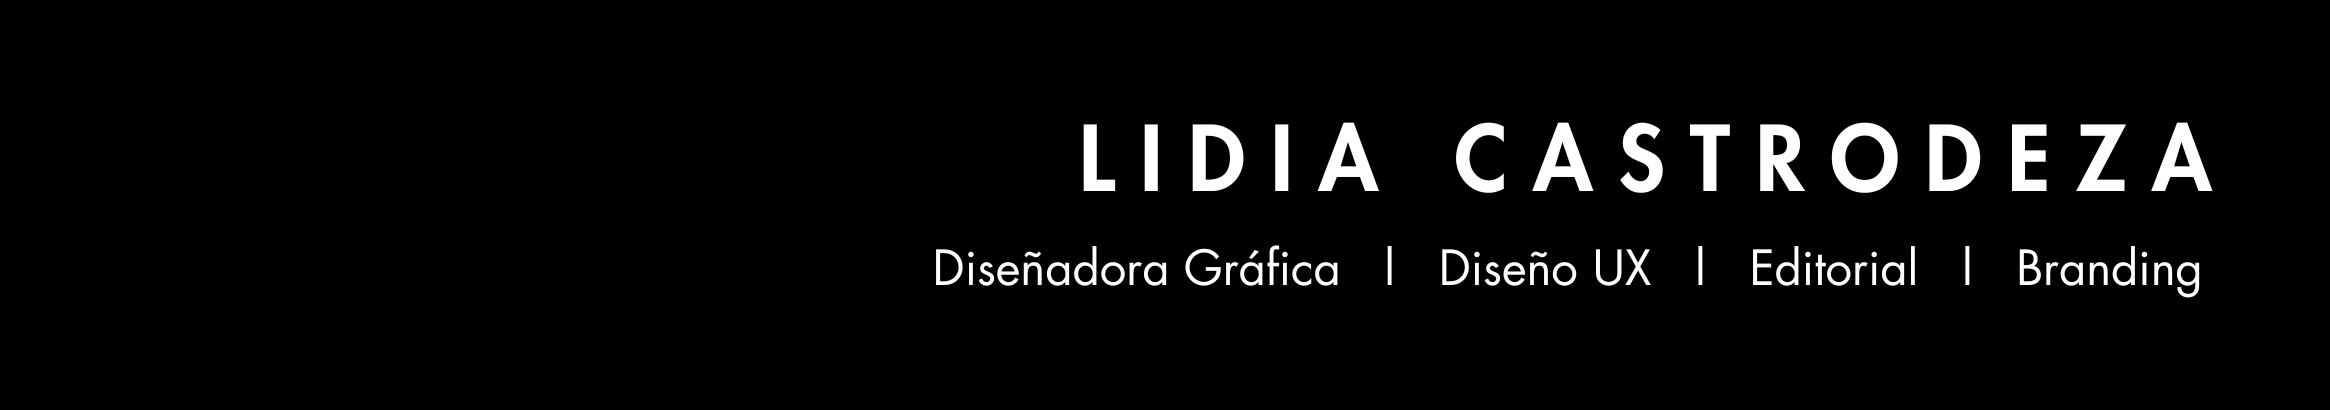 Lidia Castrodeza Chicas profilbanner